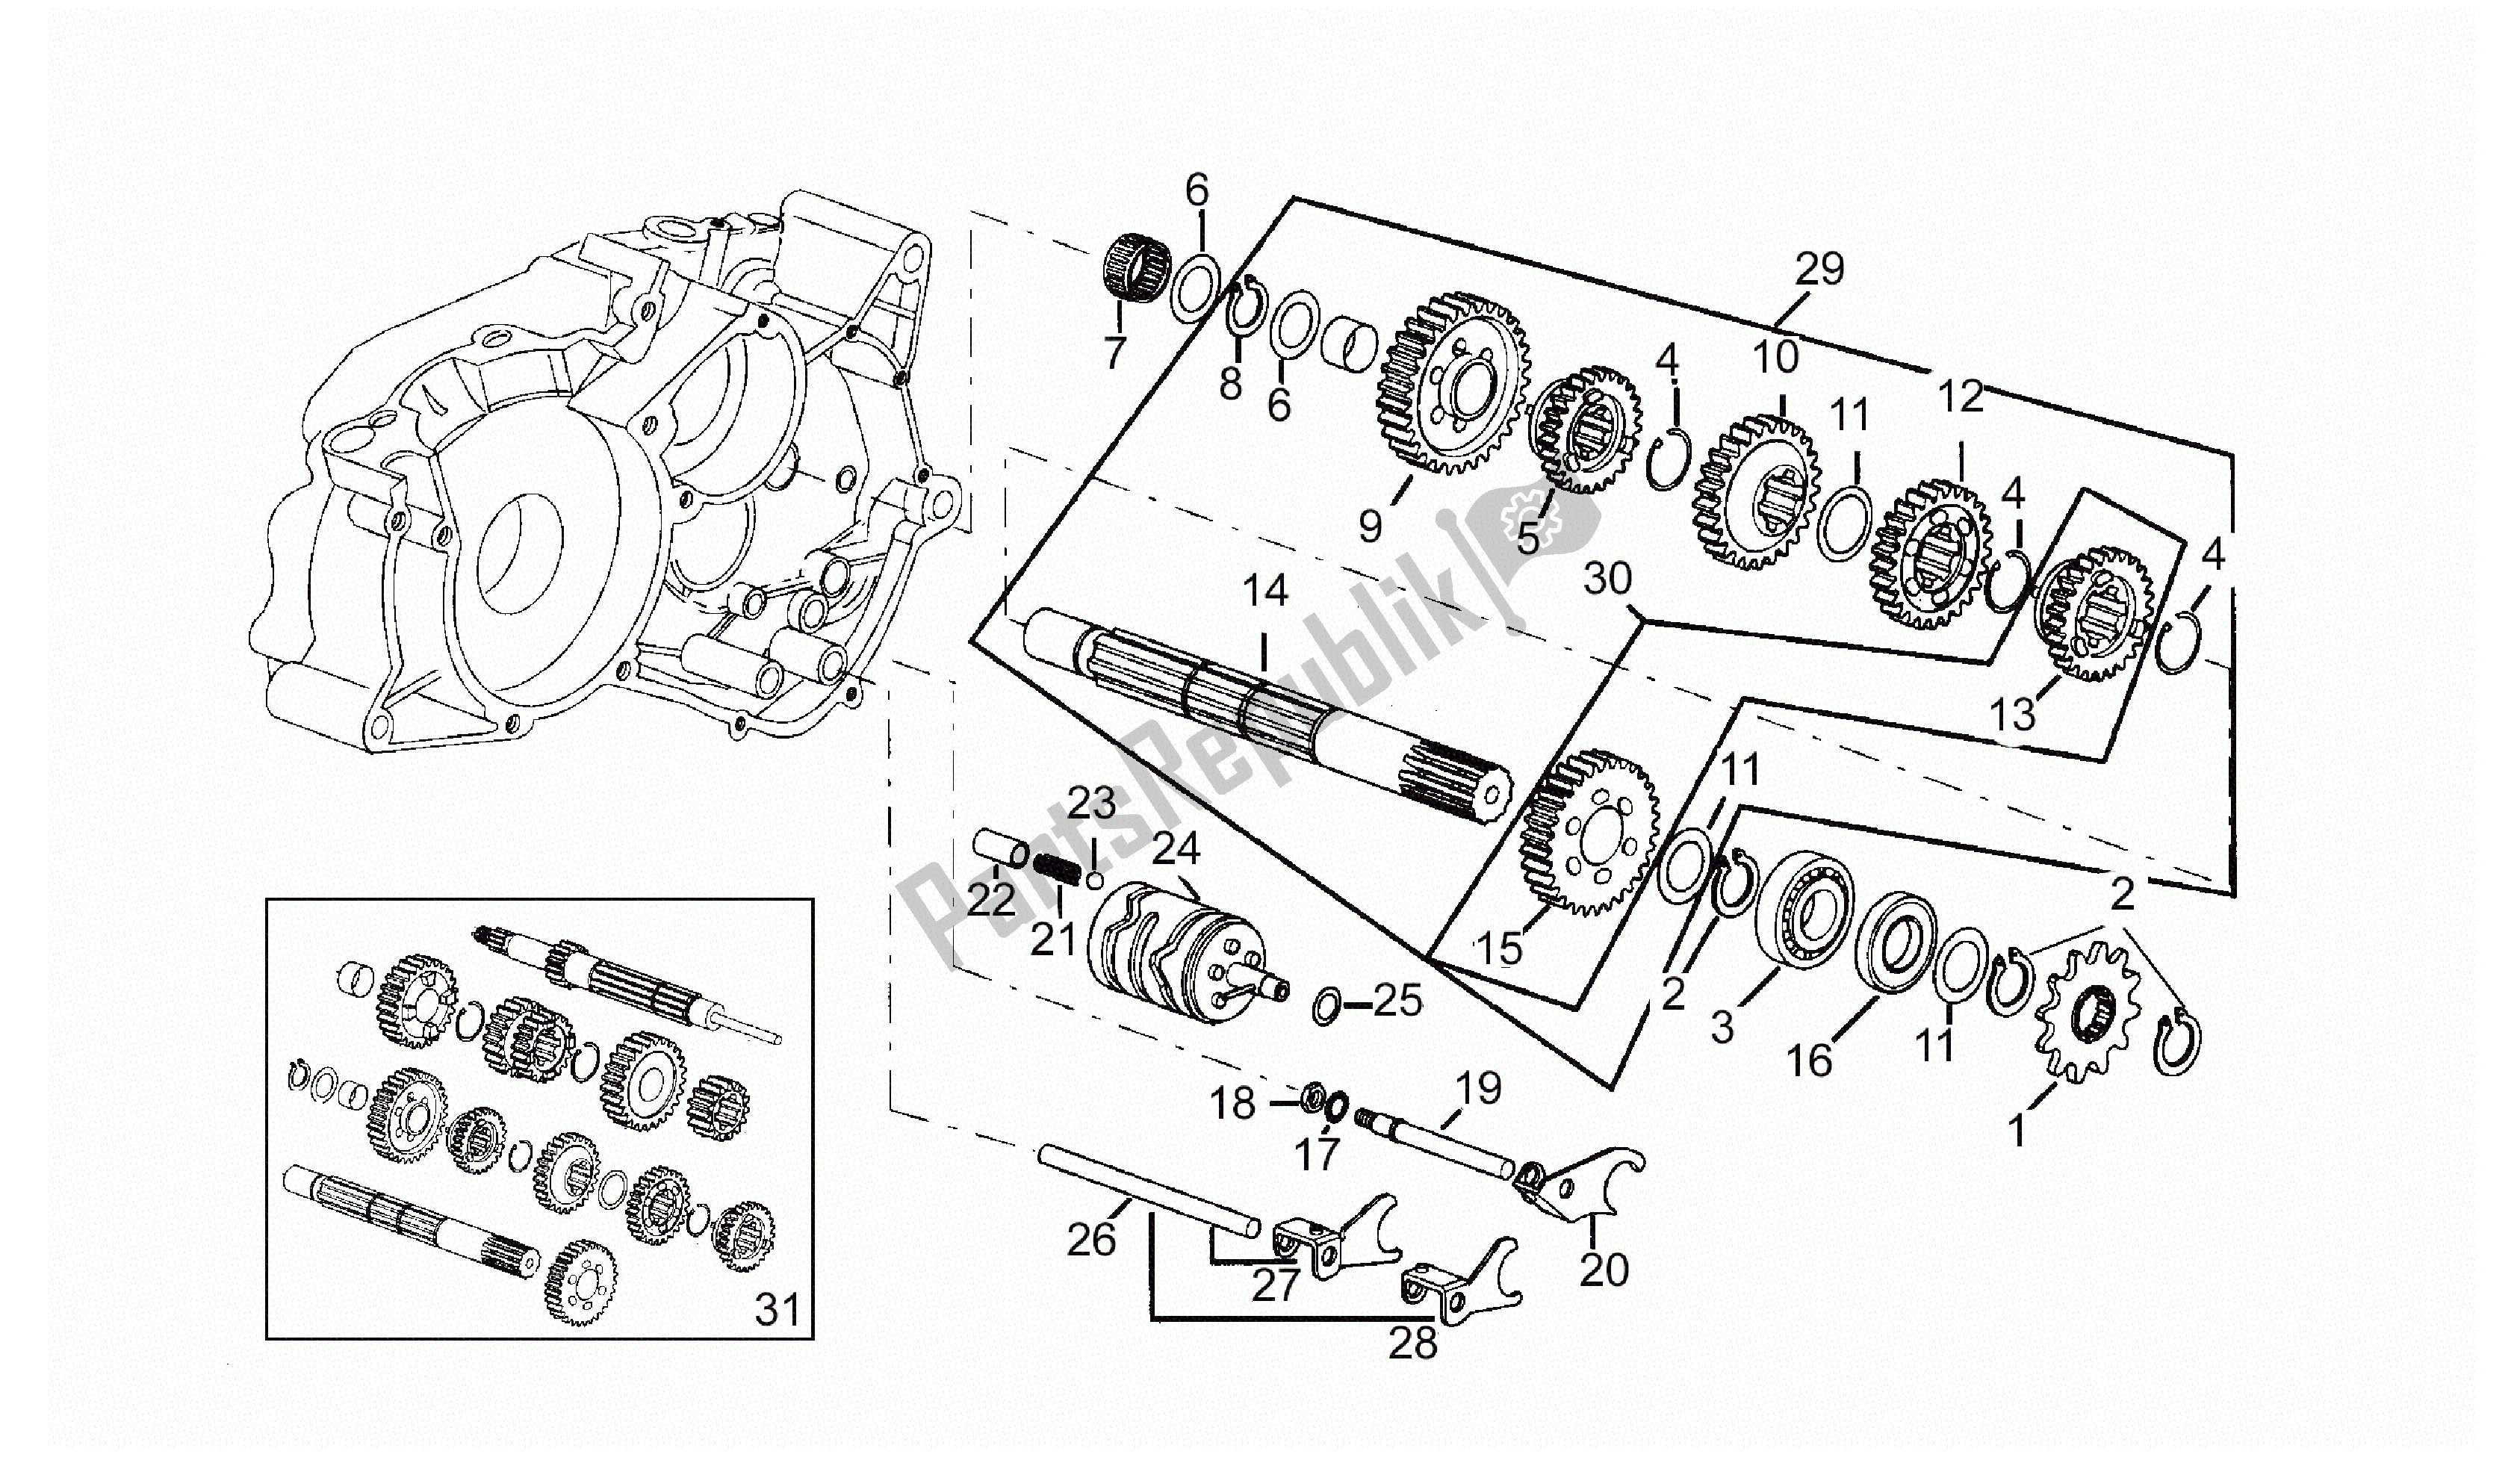 All parts for the Driven Shaft - 6 Gears of the Aprilia Minarelli 50 1991 - 2016